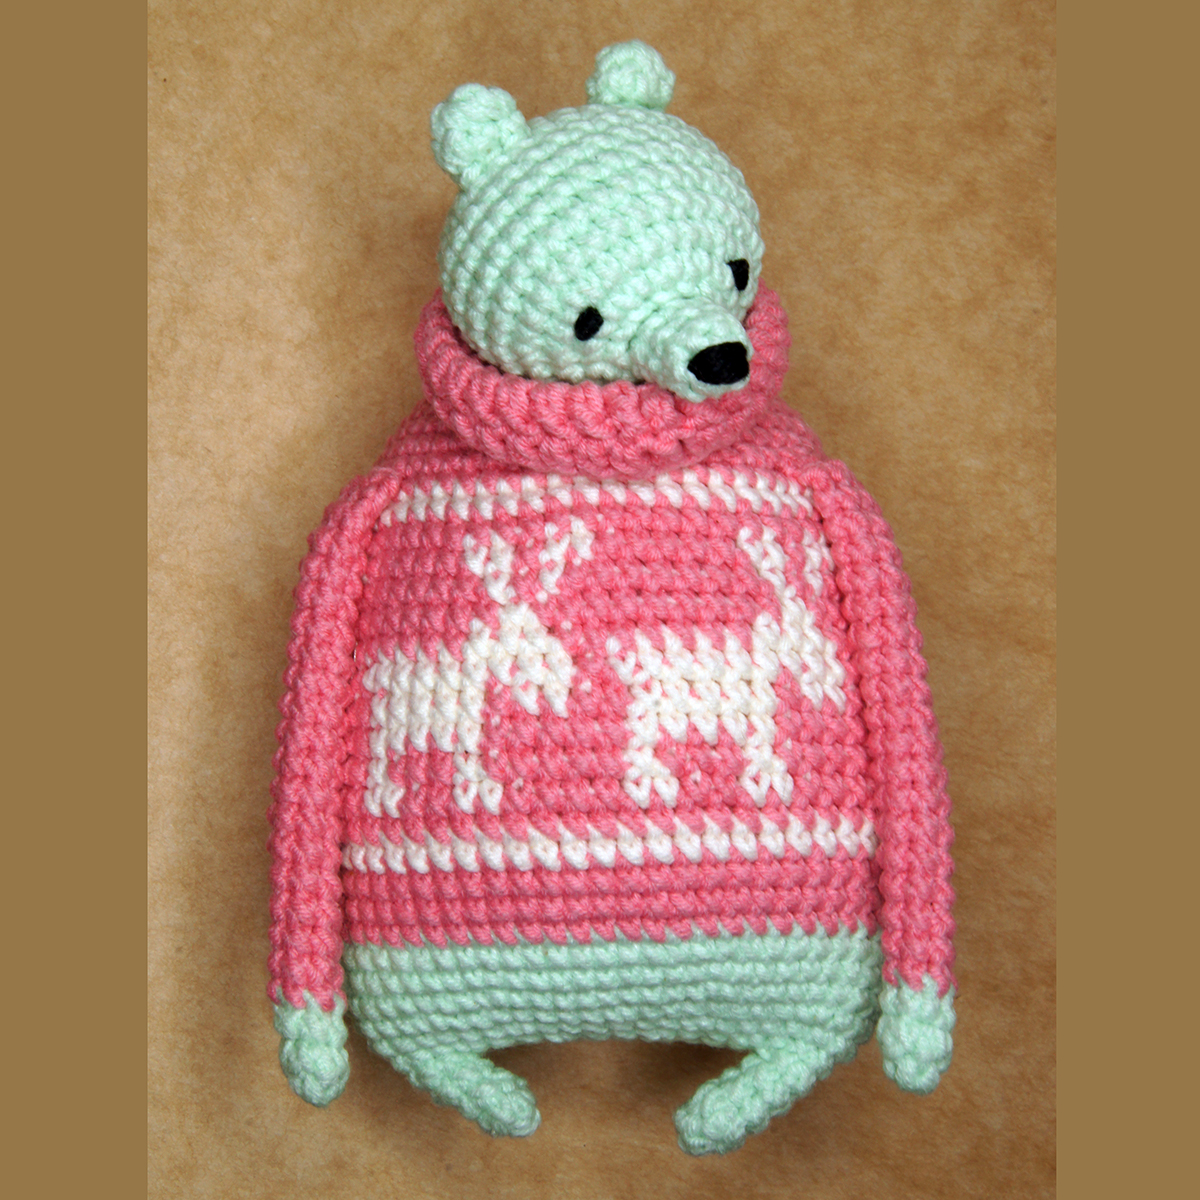 Minty Bear Crochet Pattern 🌿💖➡️ shop.amigurumi.today/product-catego…

#amigurumi #crochet #amigurumipatterns #crochetpatterns #handmade #crafts